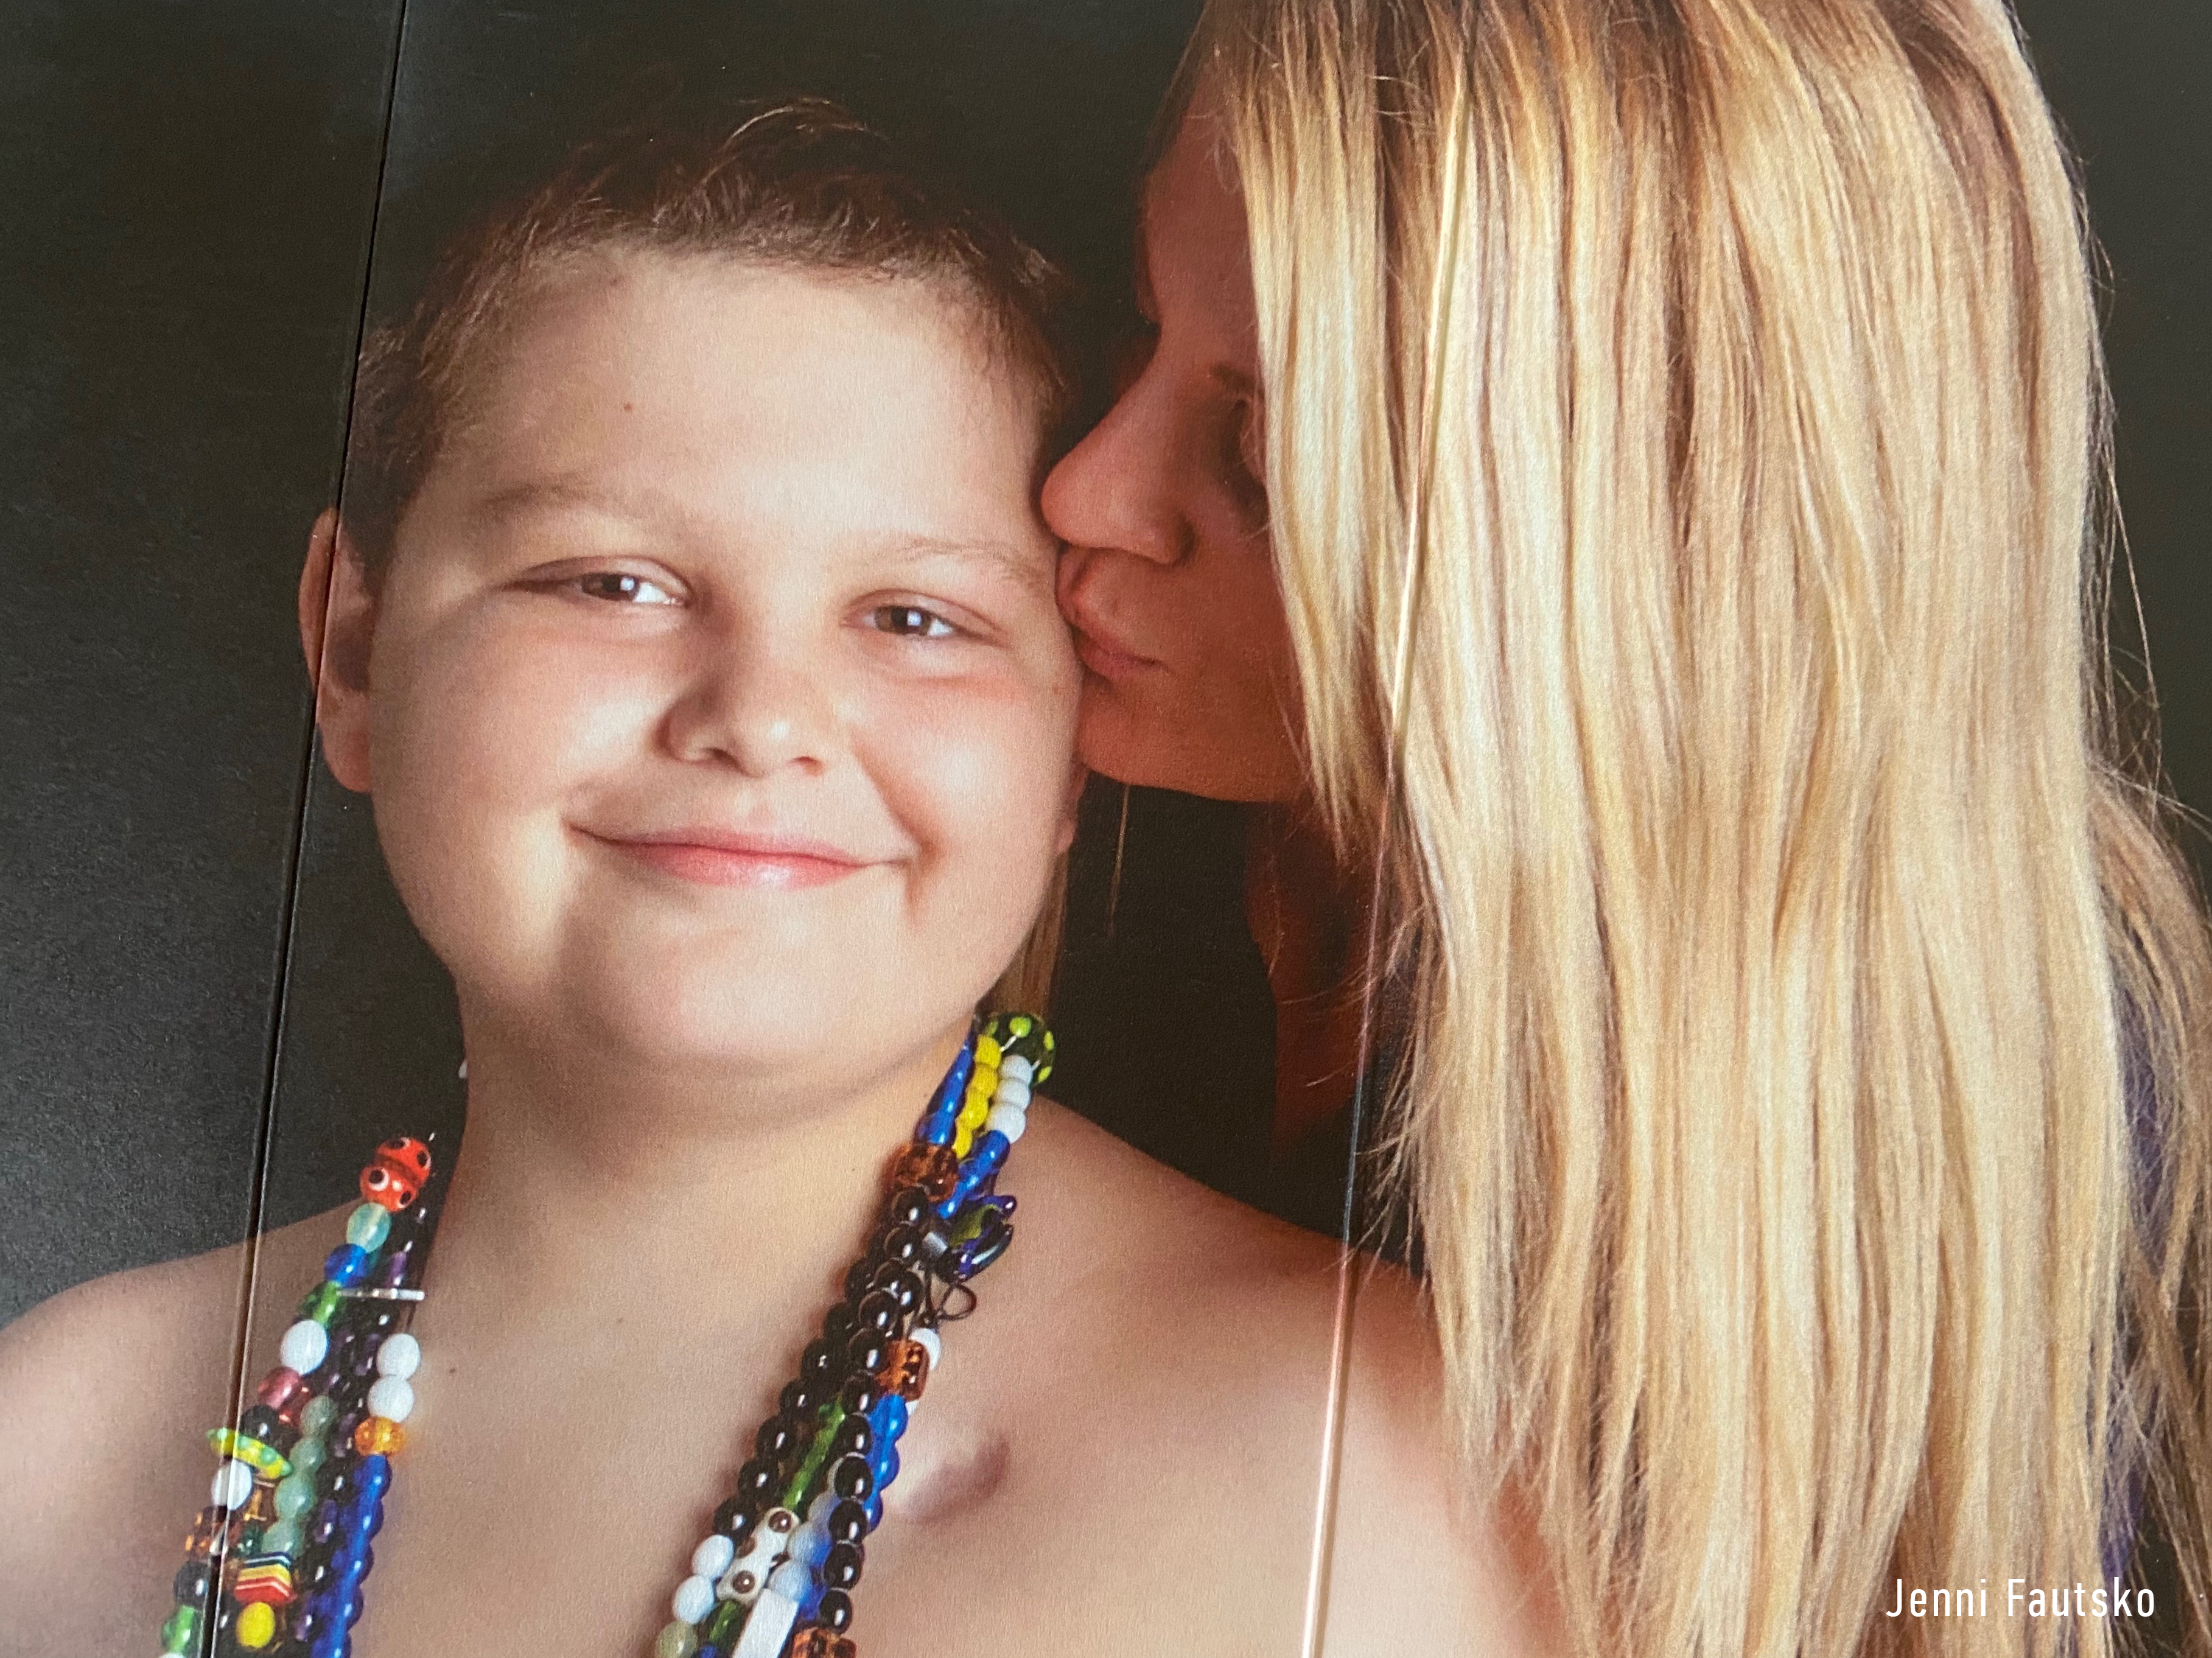 Peyton Armstrong and Jess Armstrong during Peyton's pediatric leukemia treatment